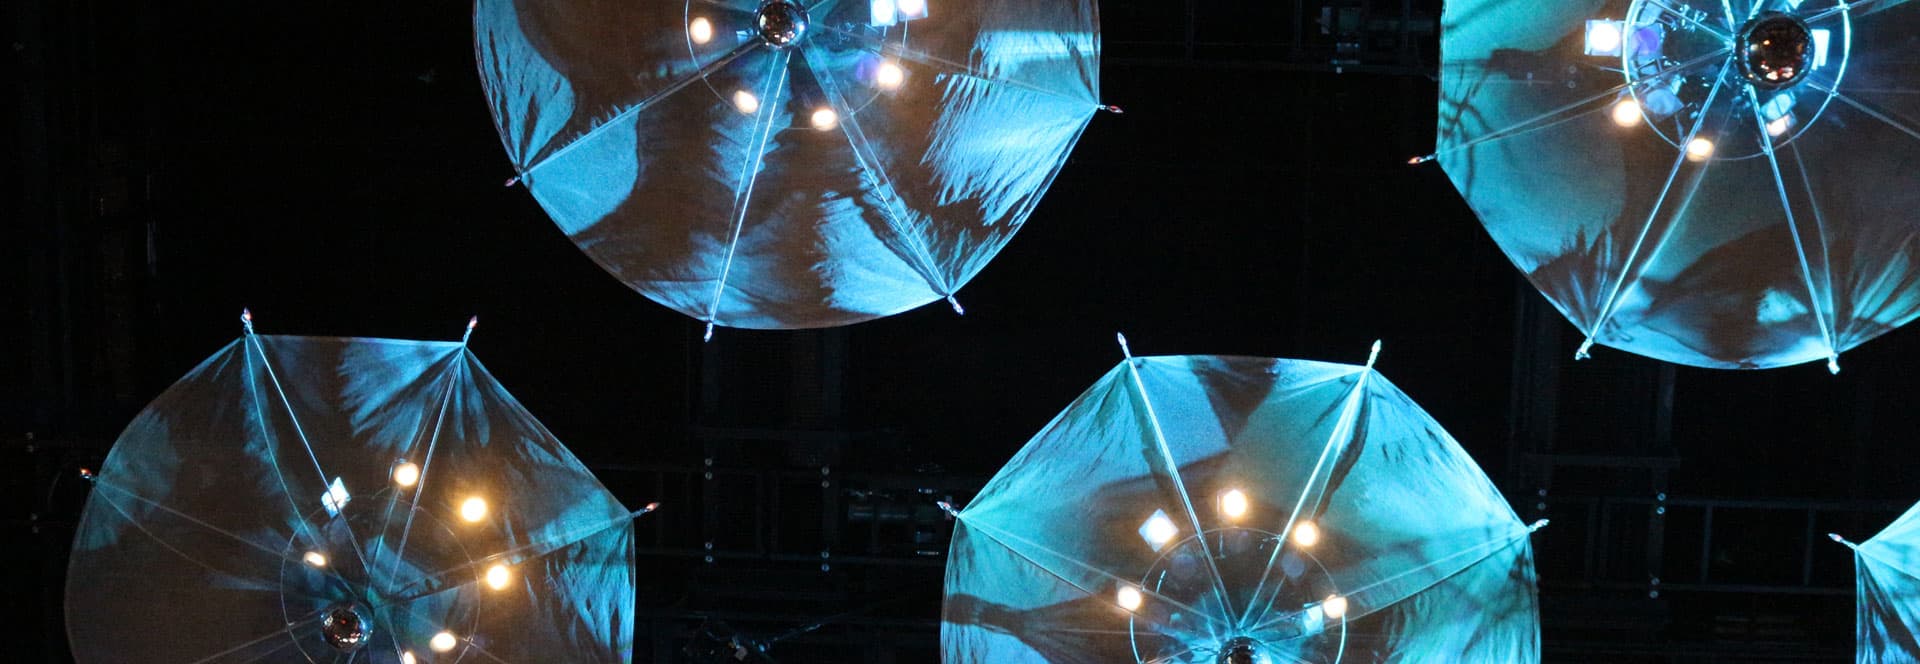 parapluies-eclairage-scene-concert